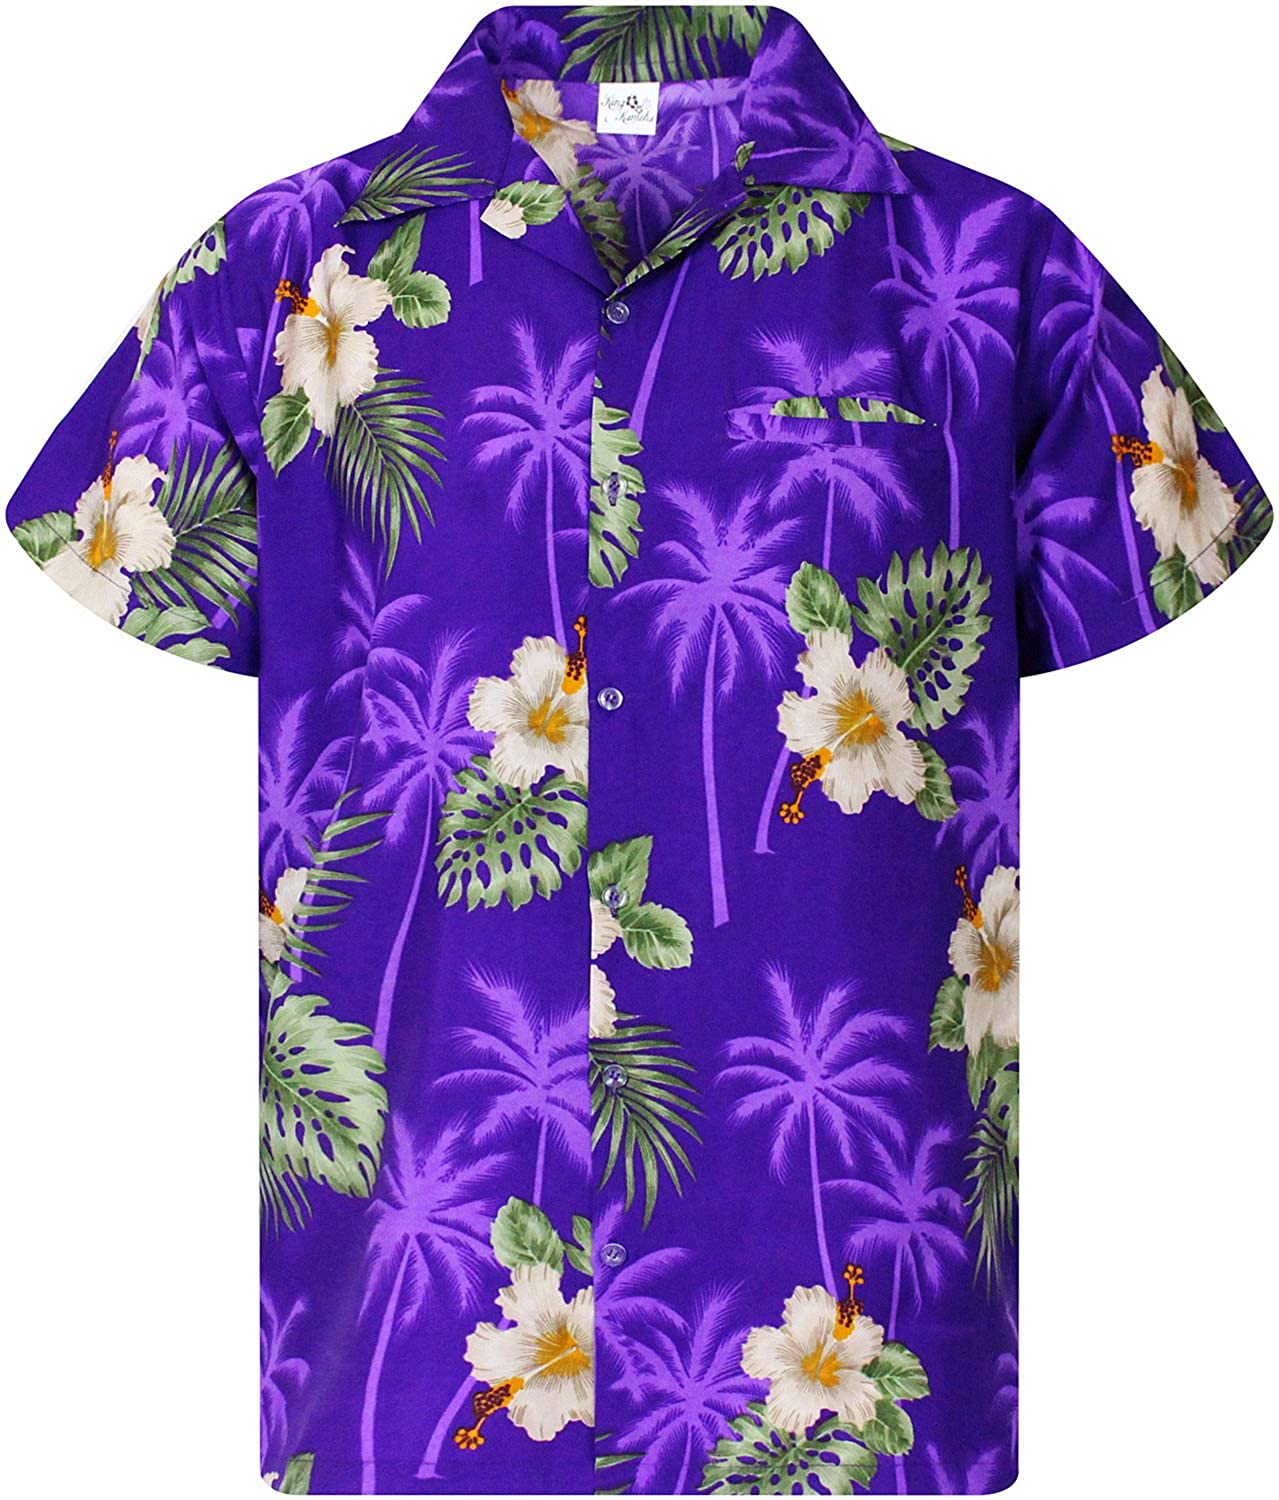 King Kameha Hawaiian Shirt for Men Funky Casual Button Down Very Loud Shortsleeve Unisex Flower Chest Border Print 